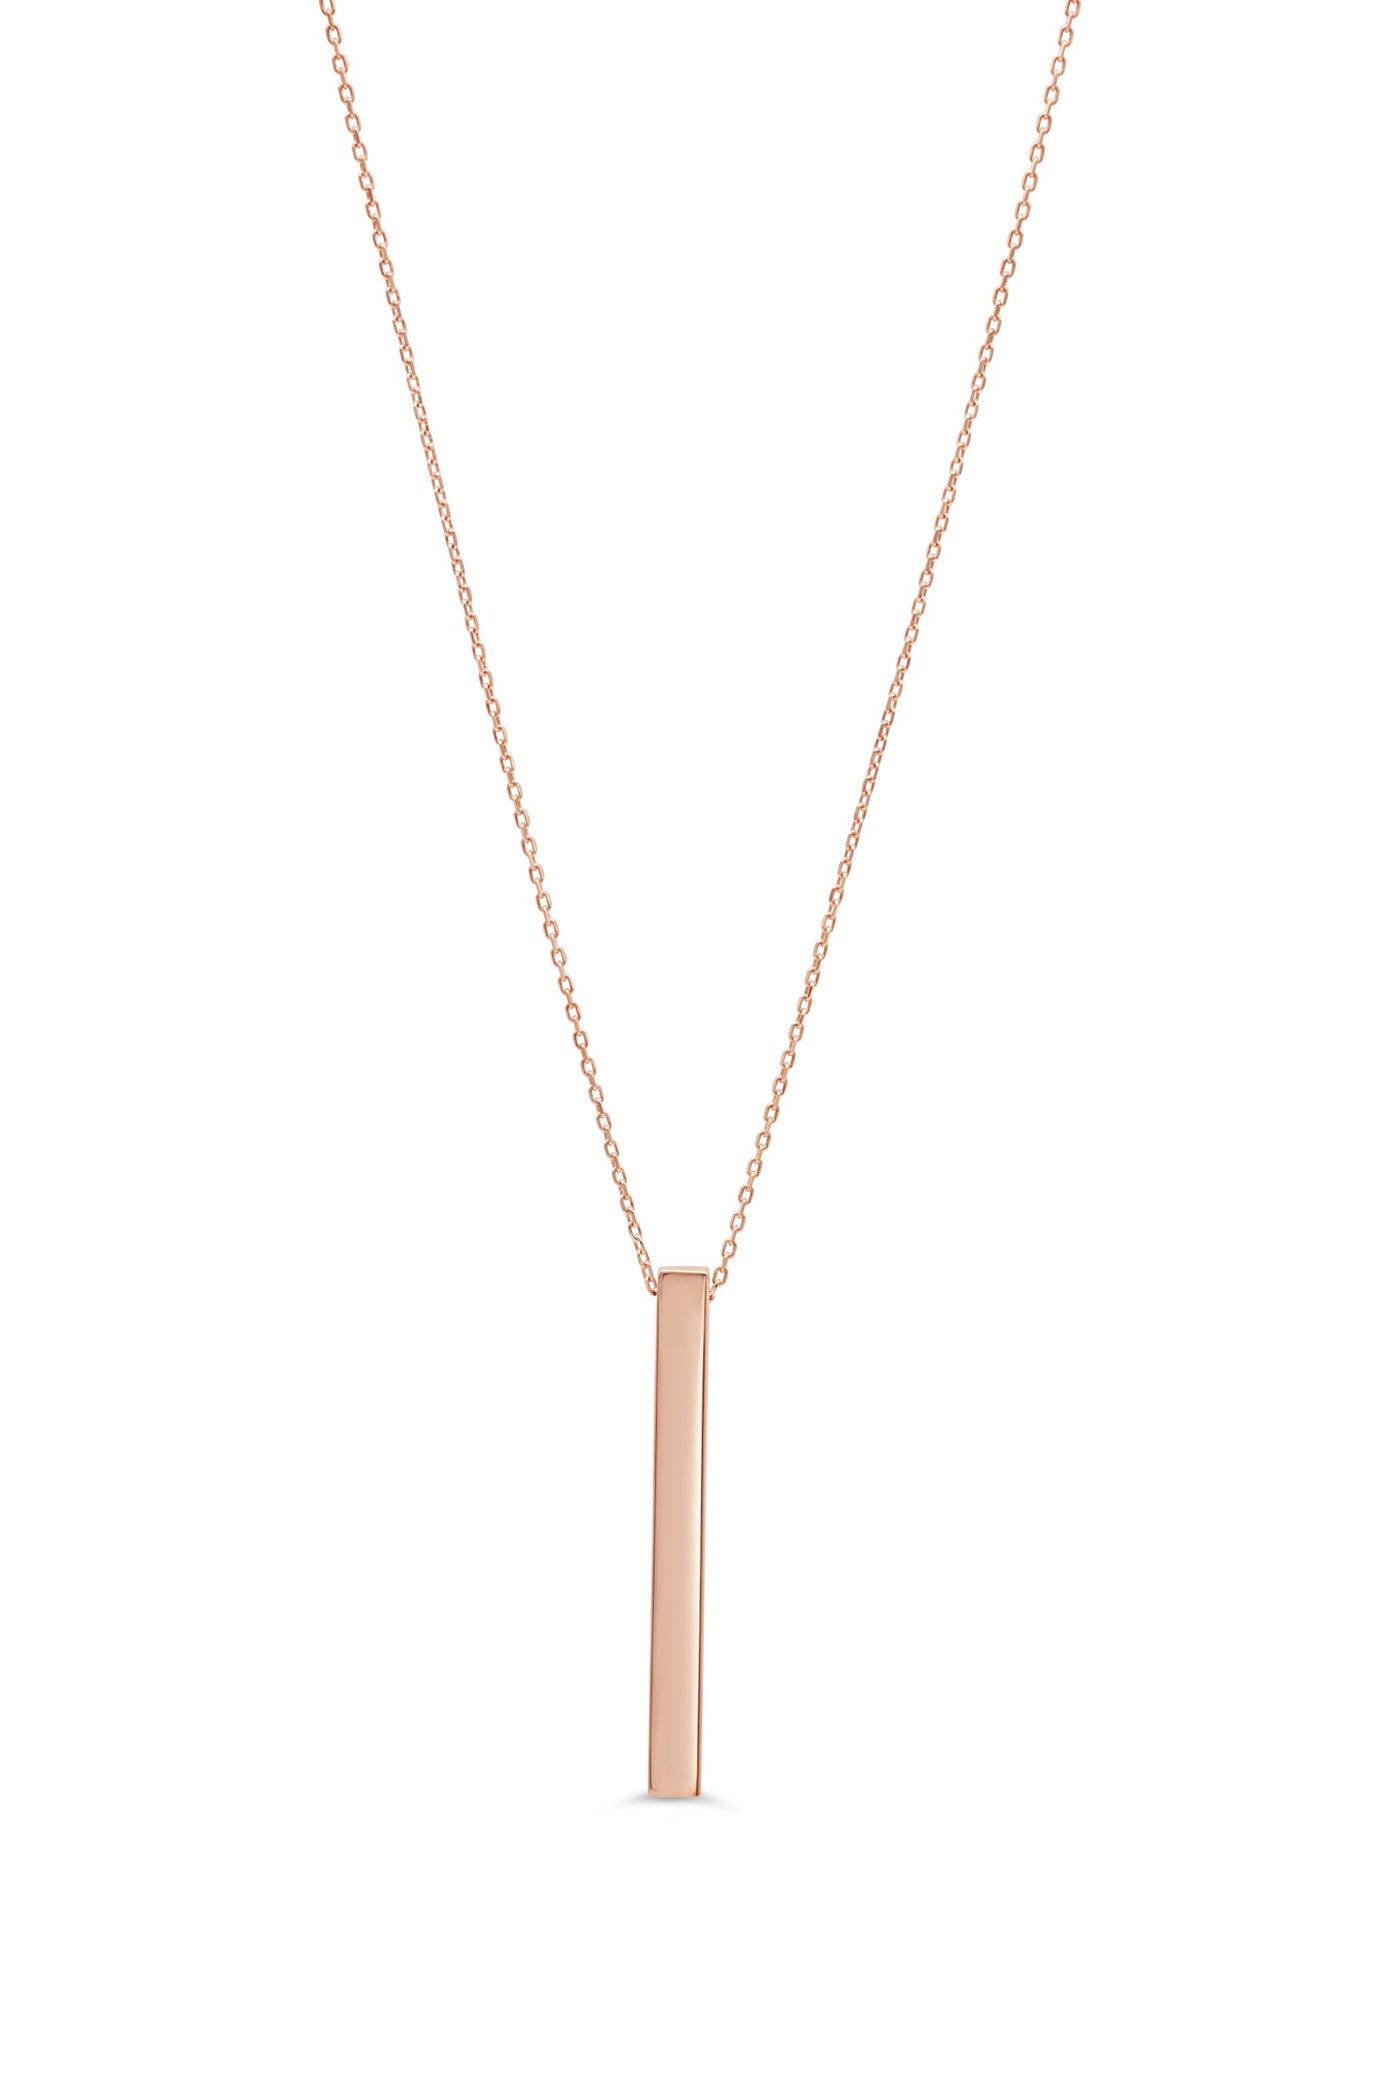 10 Karat Rose Gold 3D Vertical Bar Necklace